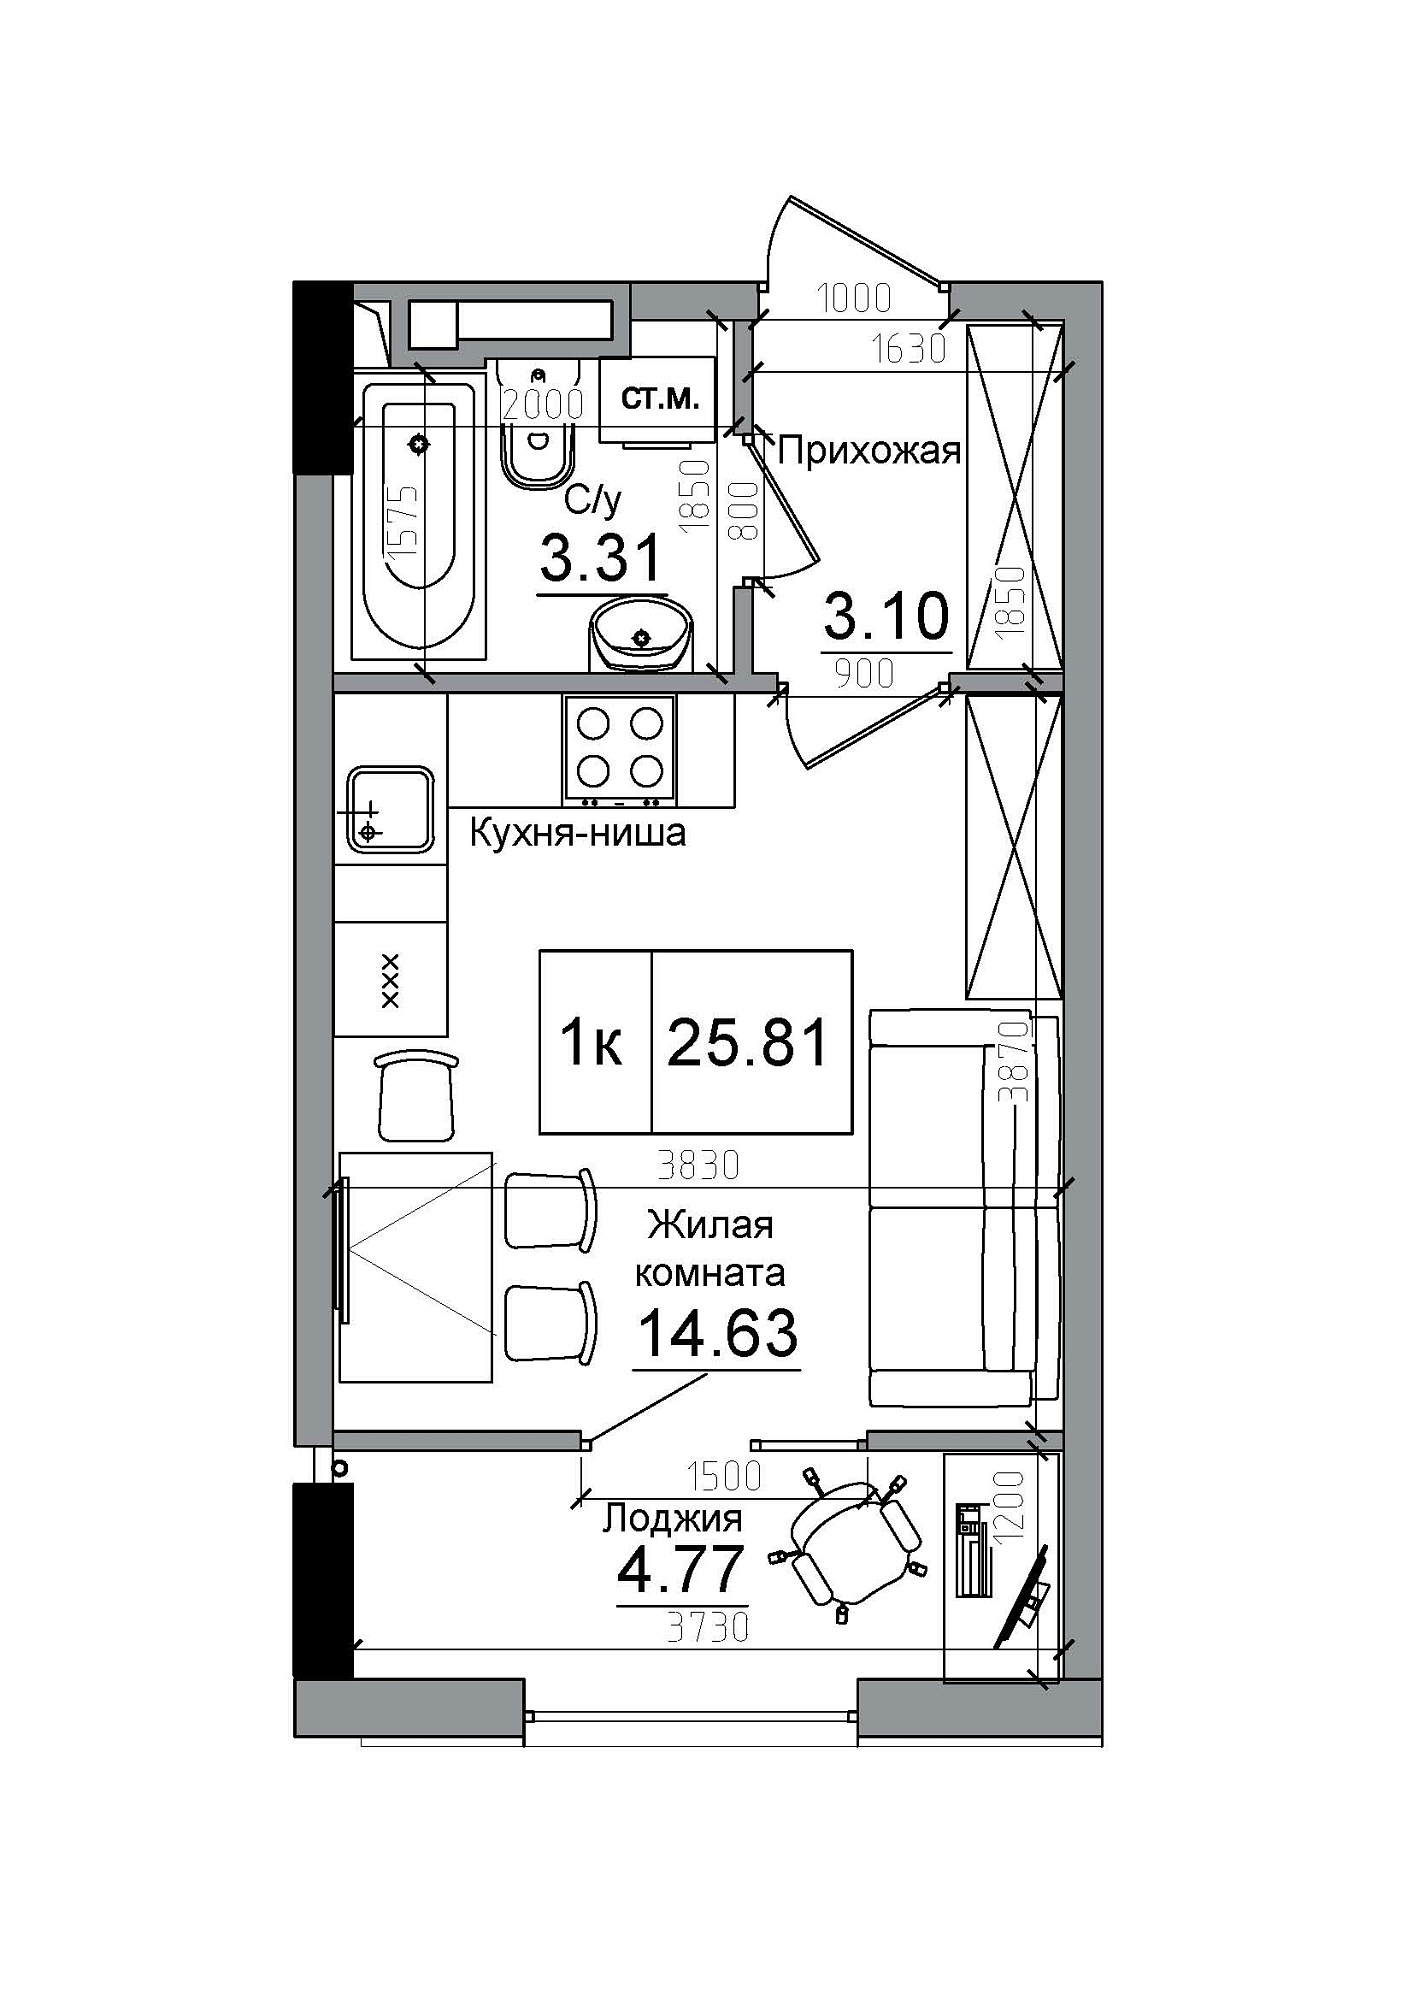 Планировка Smart-квартира площей 25.81м2, AB-12-08/00013.